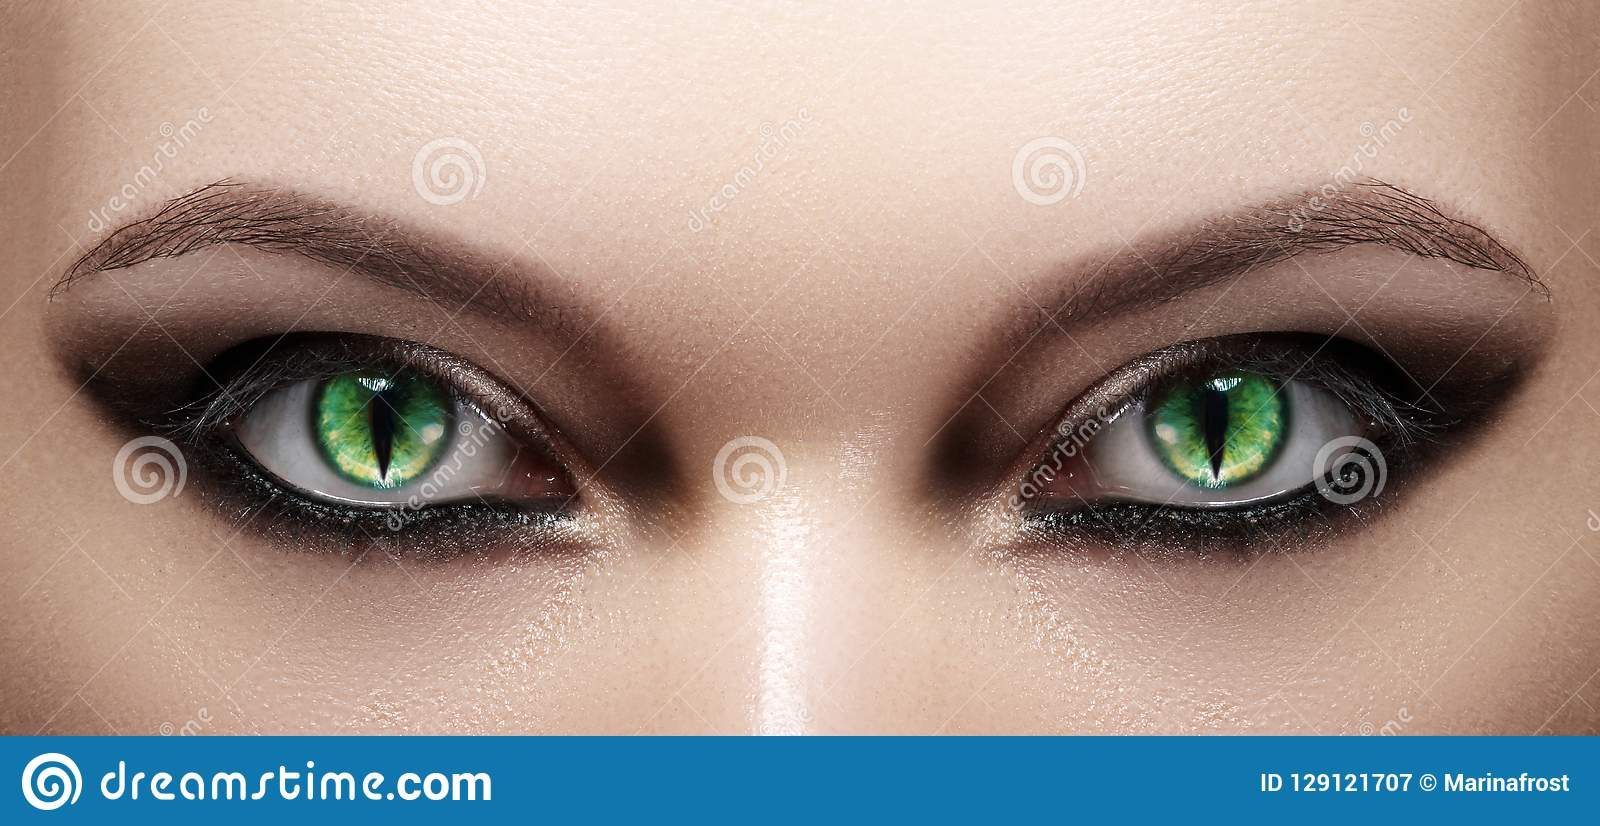 Green Cat Eye Makeup Close Up Of Woman Eyes Halloween Makeup Cat Eye Lens Fashion